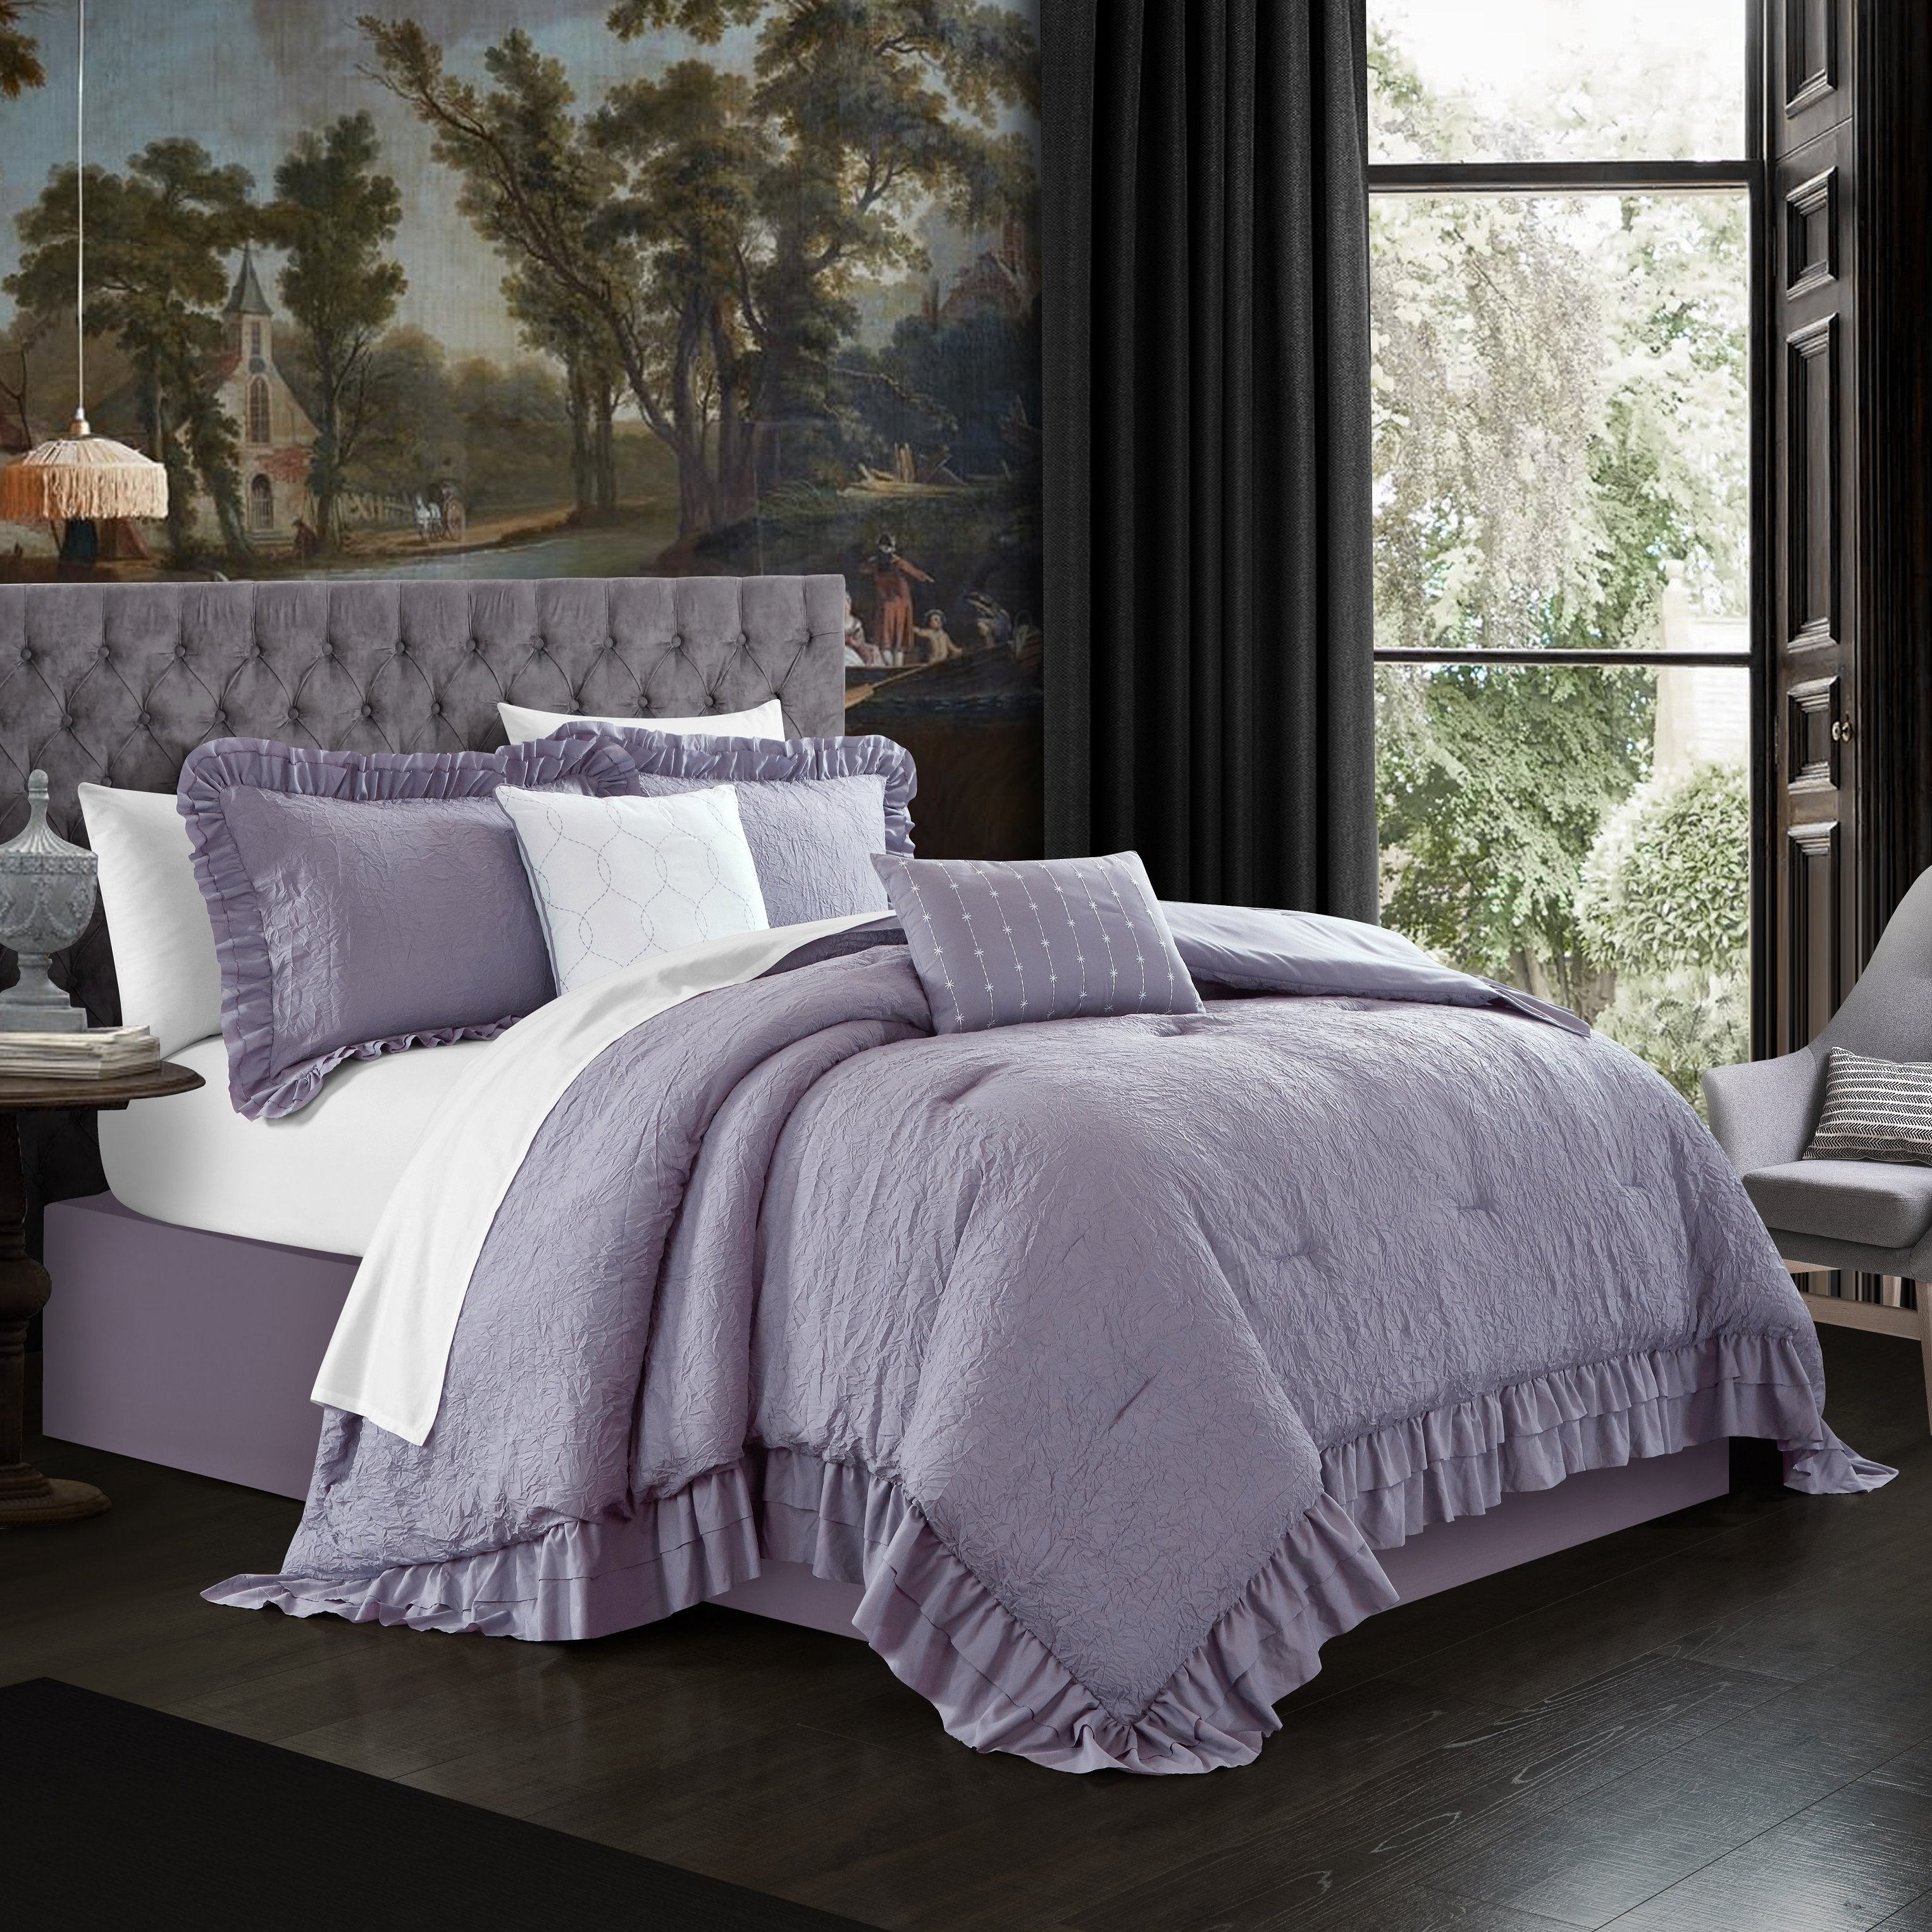 5 piece Kensley Comforter Set Washed Crinkle Ruffled Flange Border Design Bedding - Lavender, Queen - queen purple